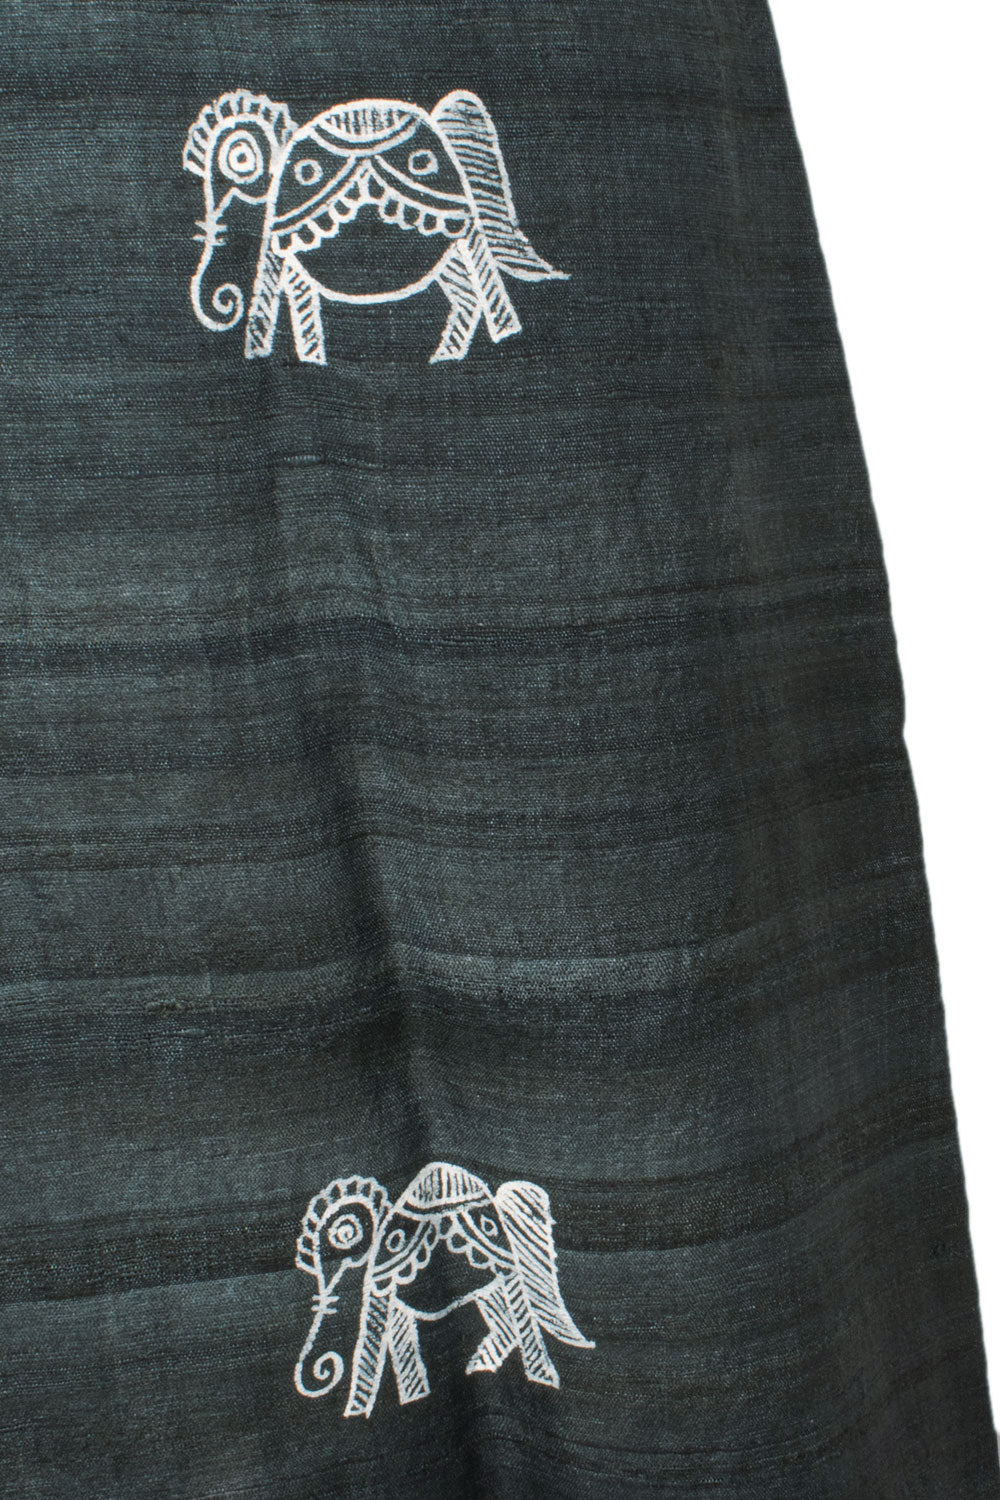 Hand Painted Madhubani Bhagalpur Tussar Silk Skirt 10057656